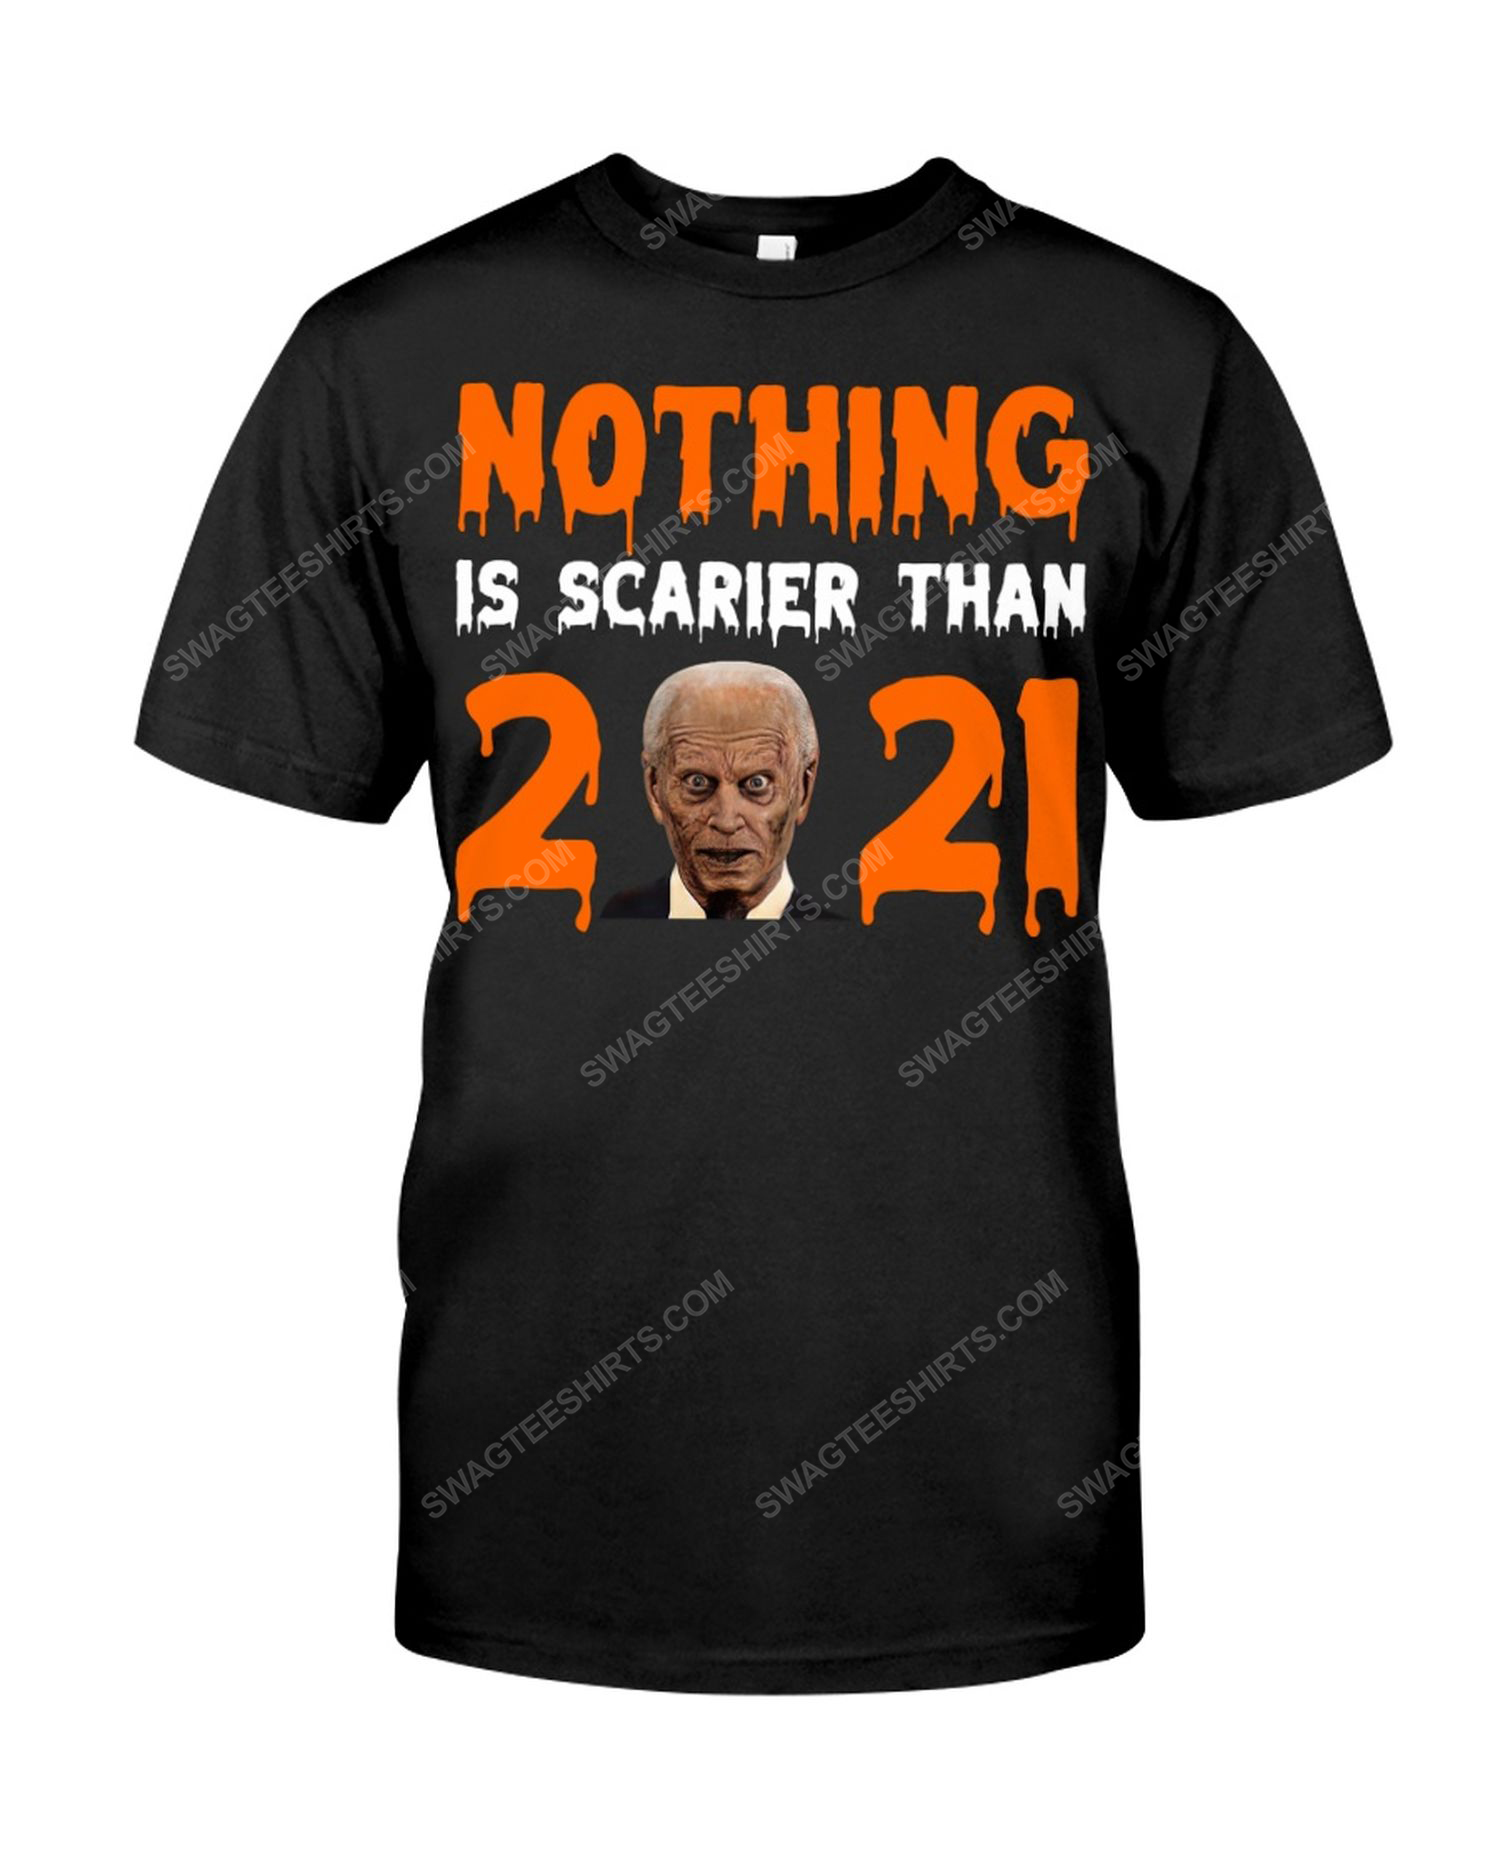 Nothing is scarier than 2021 joe biden zombie political tshirt